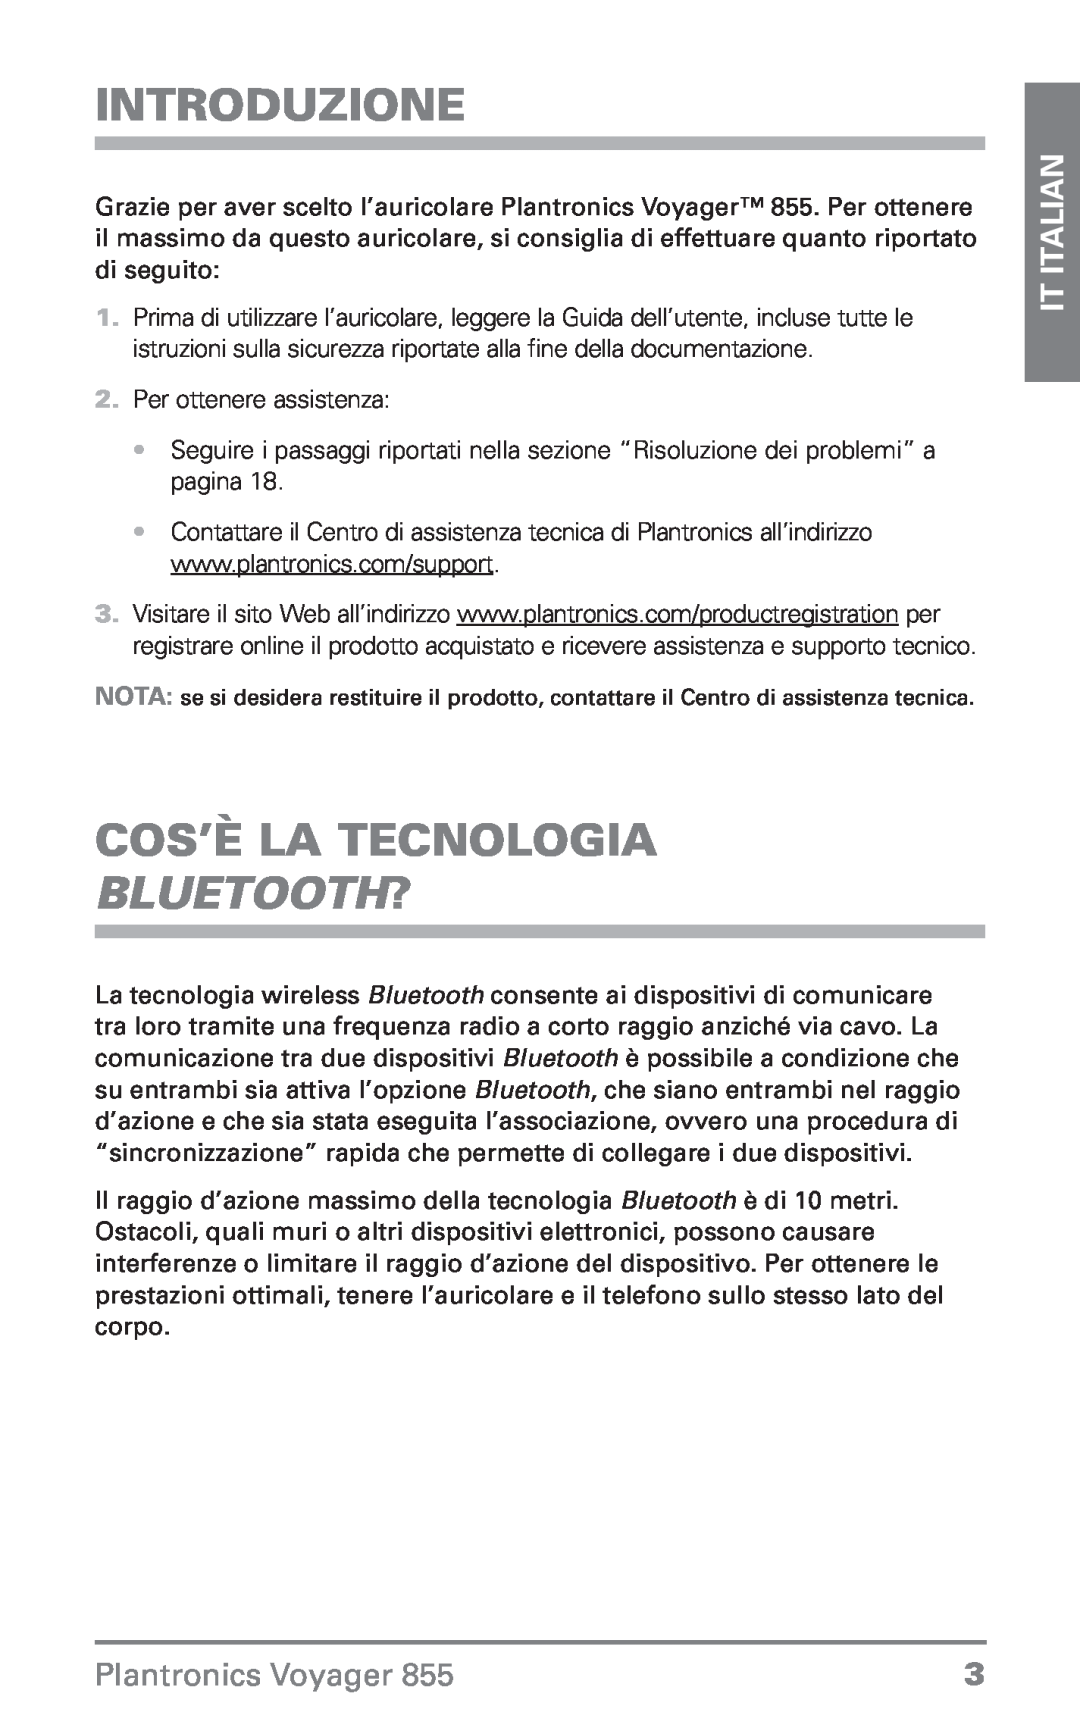 Plantronics Voyager 855 manual do utilizador Introduzione, Cos’è la tecnologia, Plantronics Voyager, Bluetooth?, IT Italian 